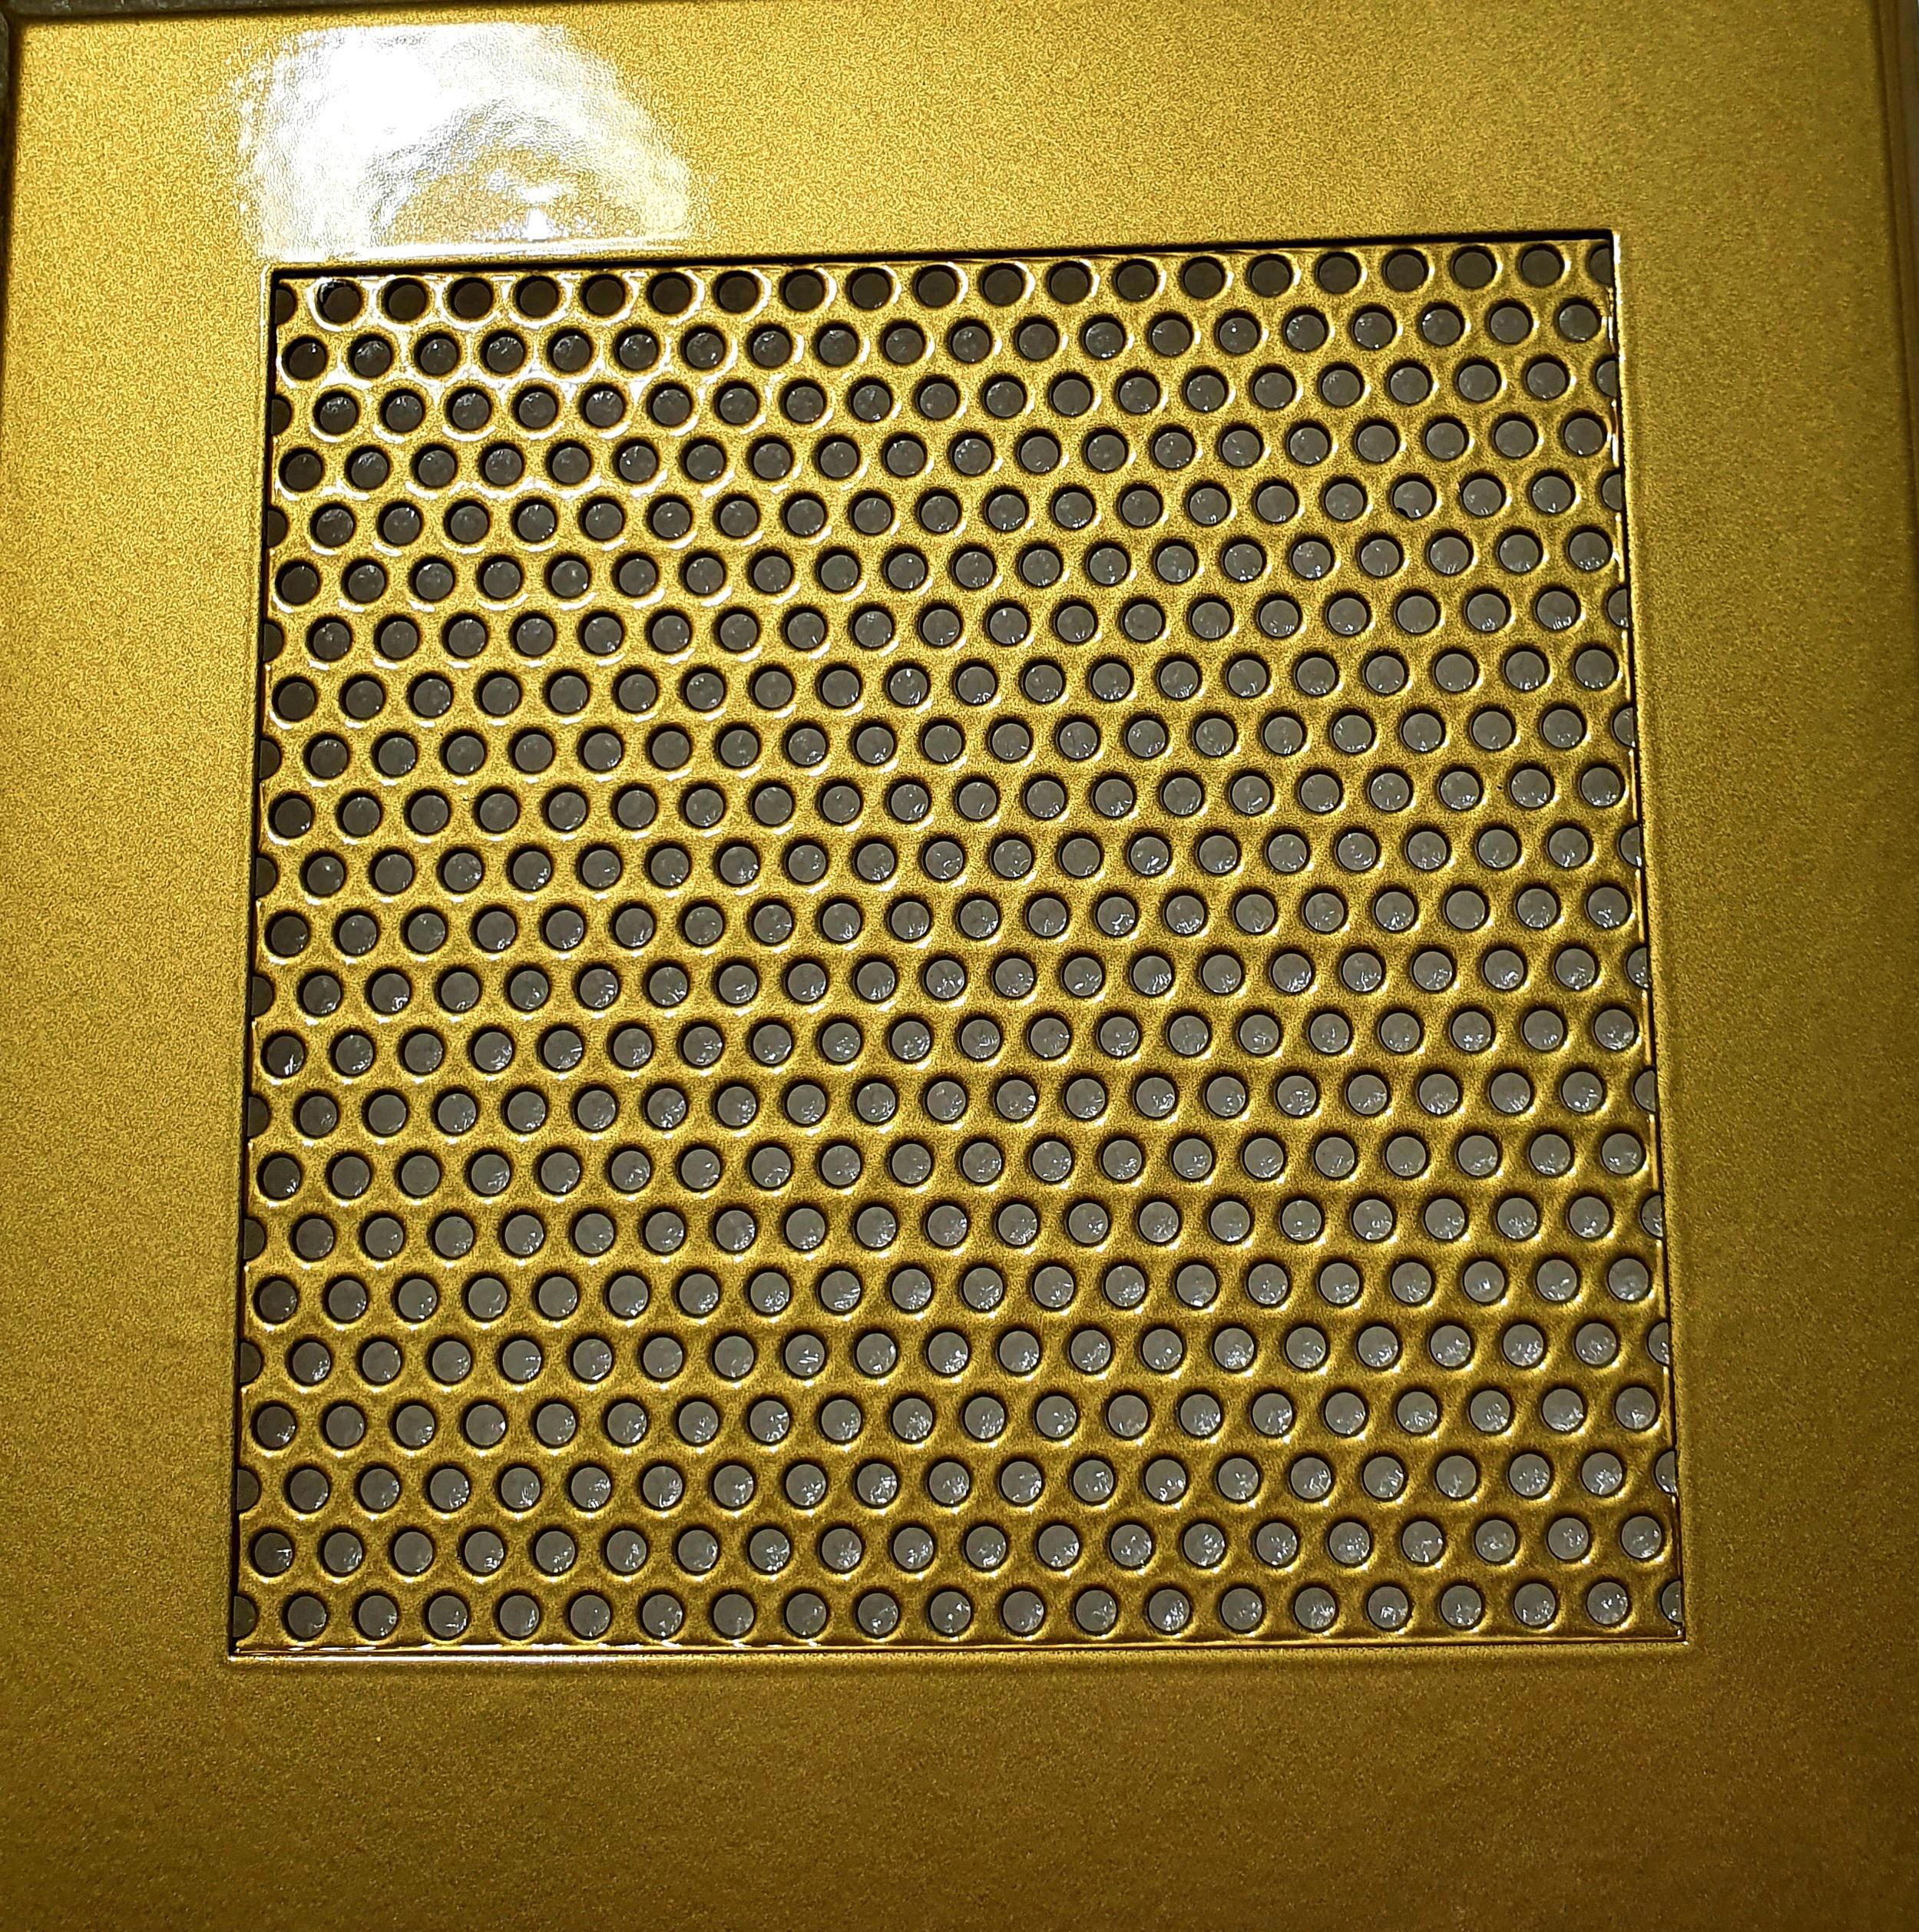 90559989 Решетка вентиляционная на магнитах VRK001502 150х150 мм металл цвет золотой STLM-0282462 ШАМРАЙ